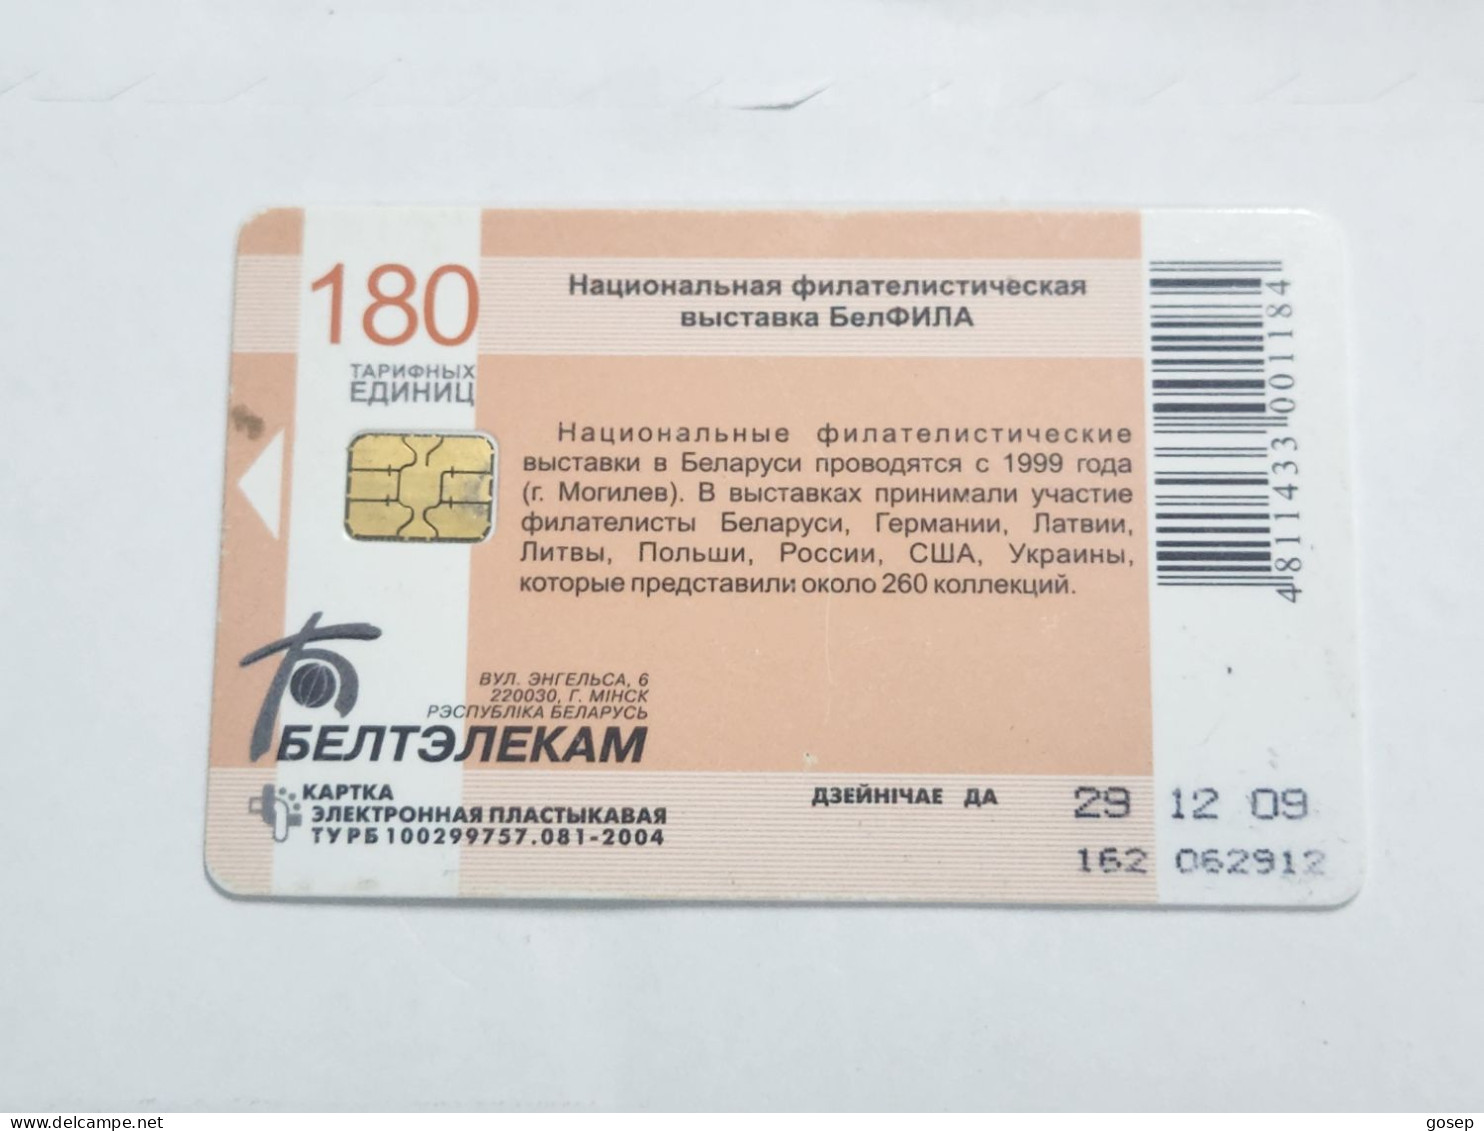 BELARUS-(BY-BLT-162)-National Philatelic Fair-(139)(GOLD CHIP)(062912)(tirage-130.000)-used Card+1card Prepiad Free - Belarus